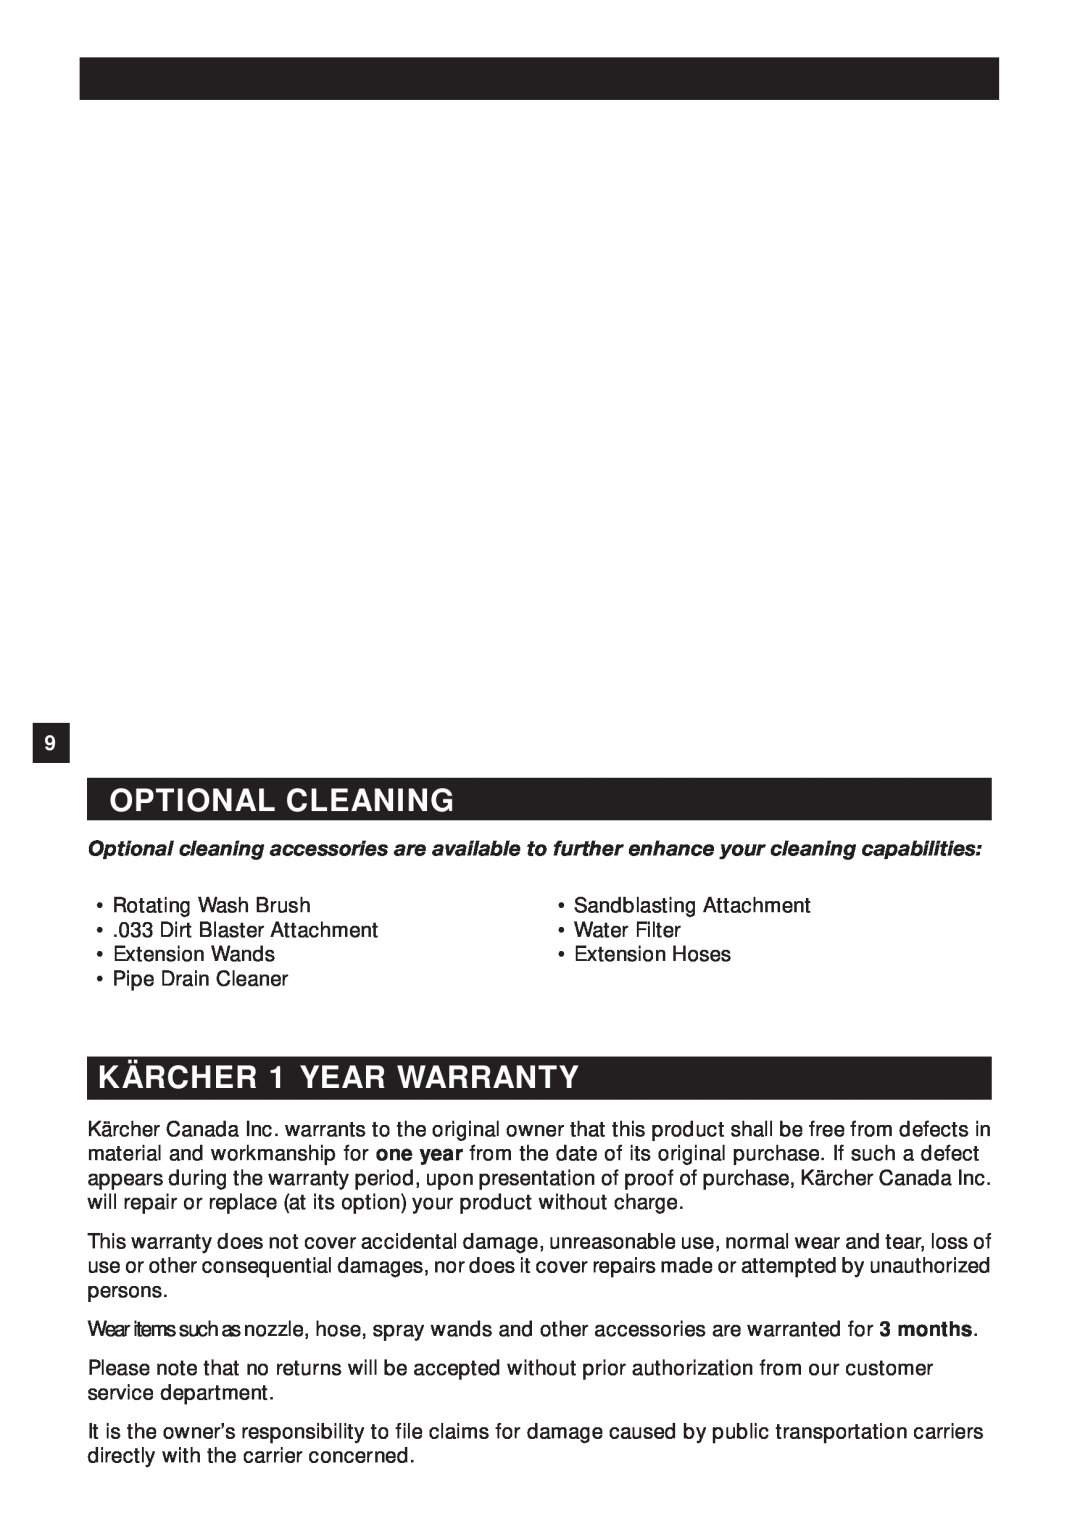 Karcher HD 425 specifications Optional Cleaning, KÄRCHER 1 YEAR WARRANTY 